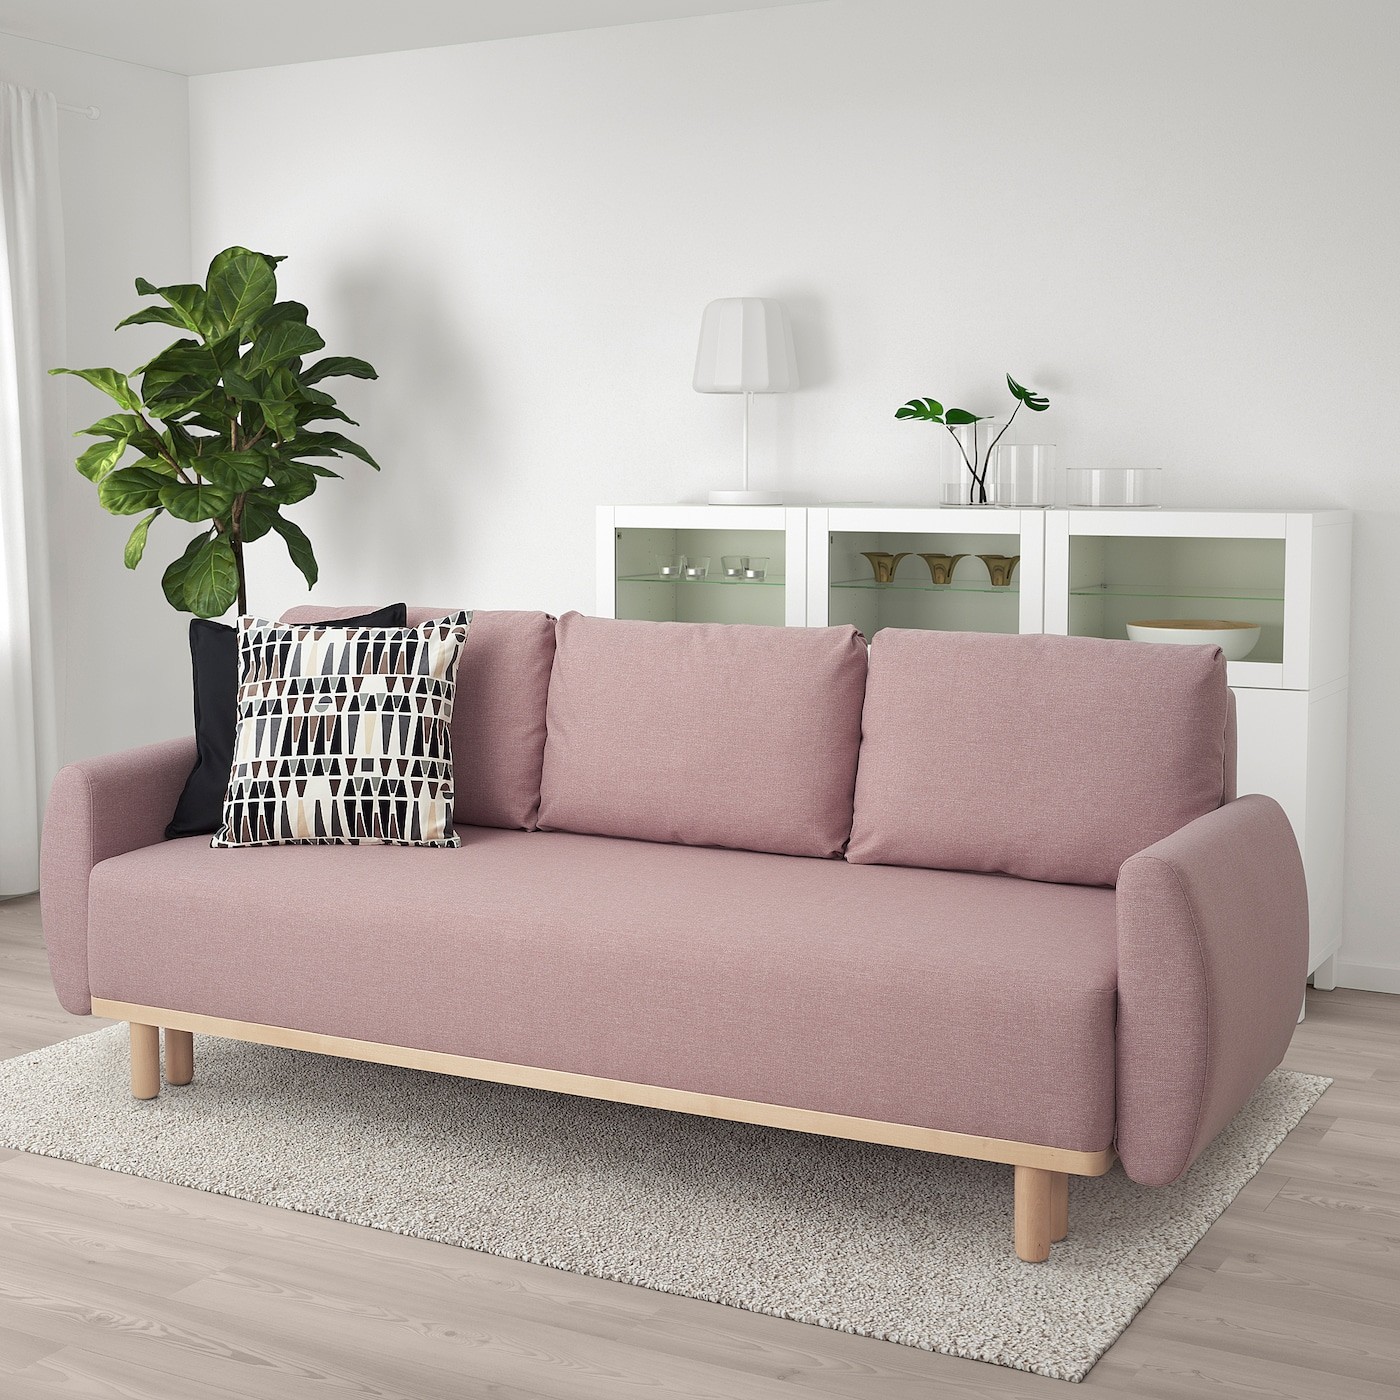 GRUNNARP 3-seat sofa-bed